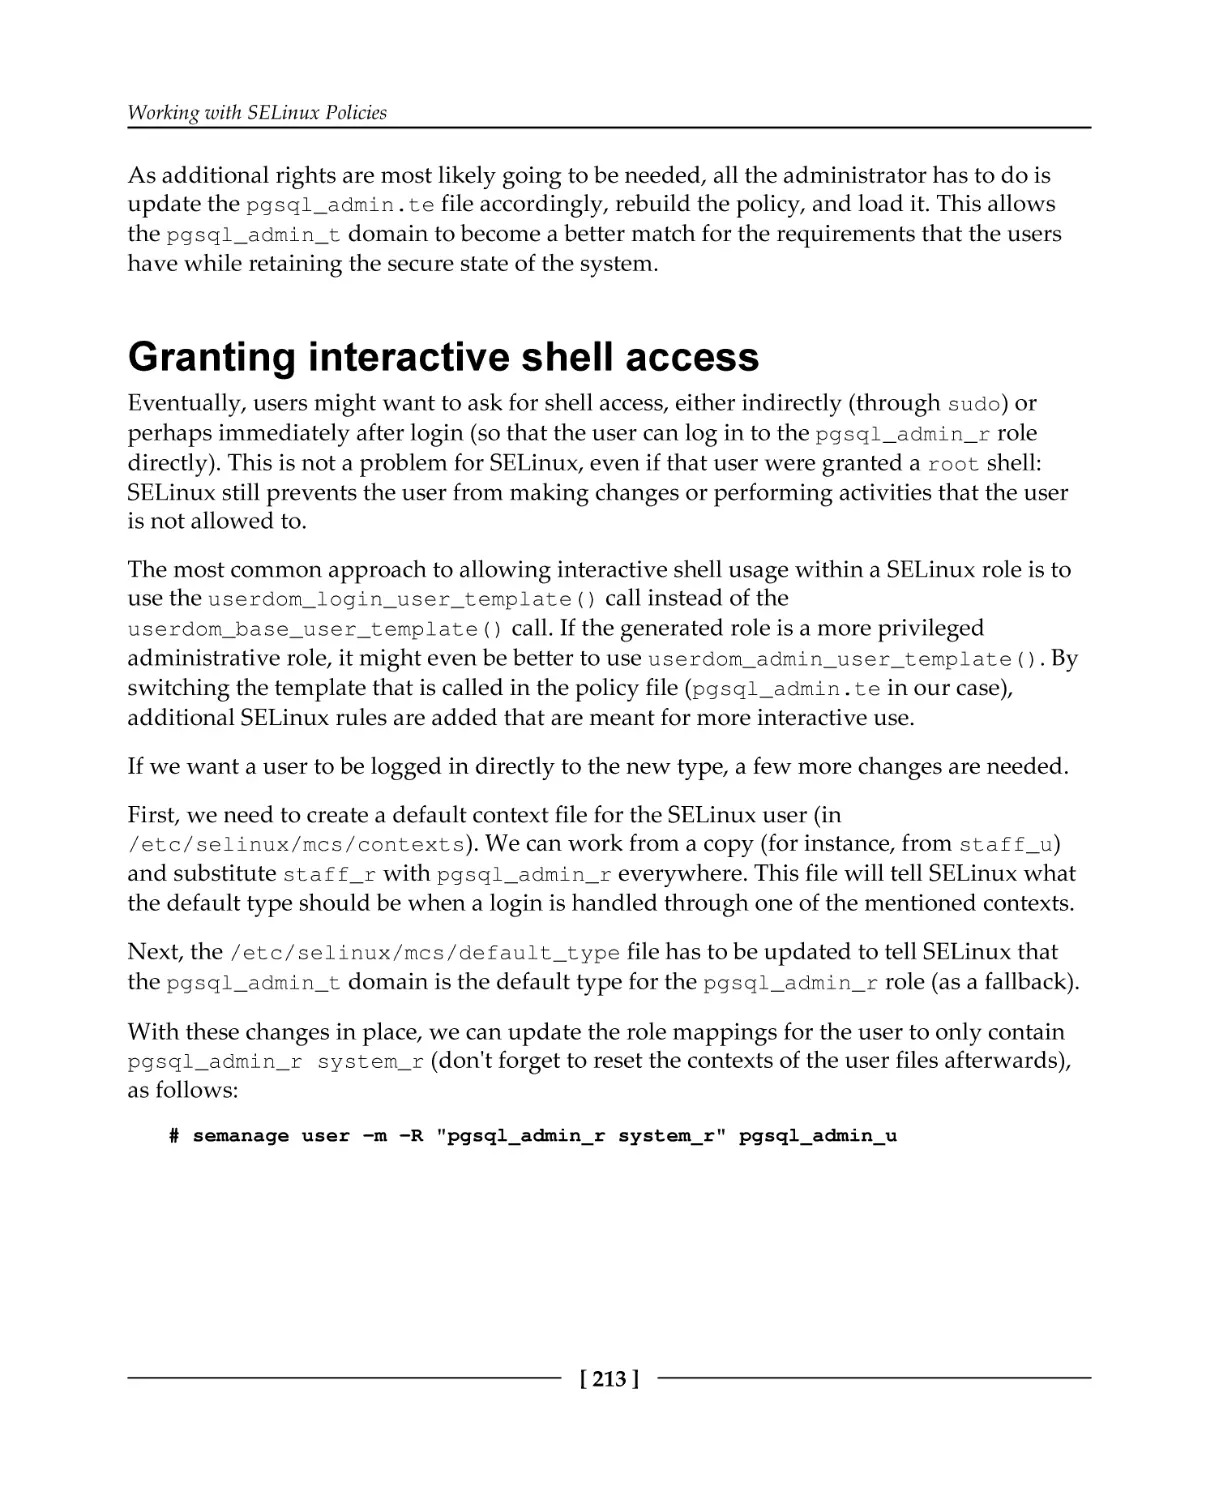 Granting interactive shell access